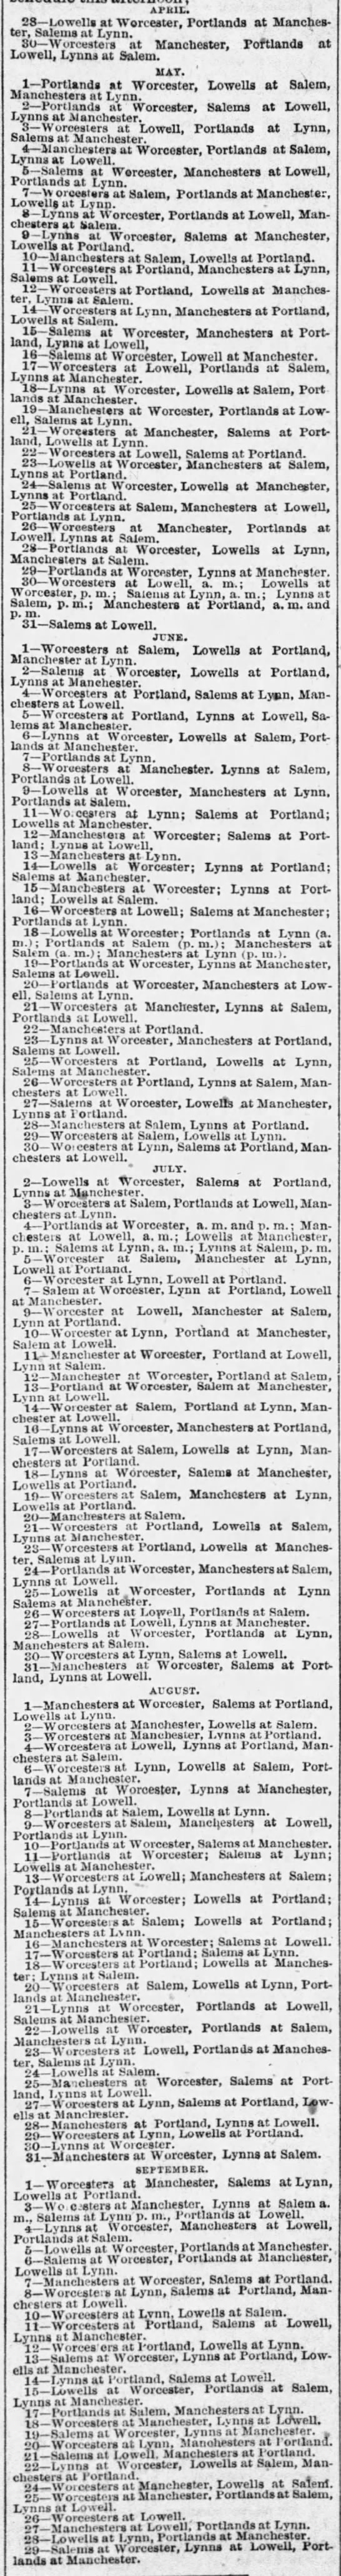 1888 New England League schedule - 